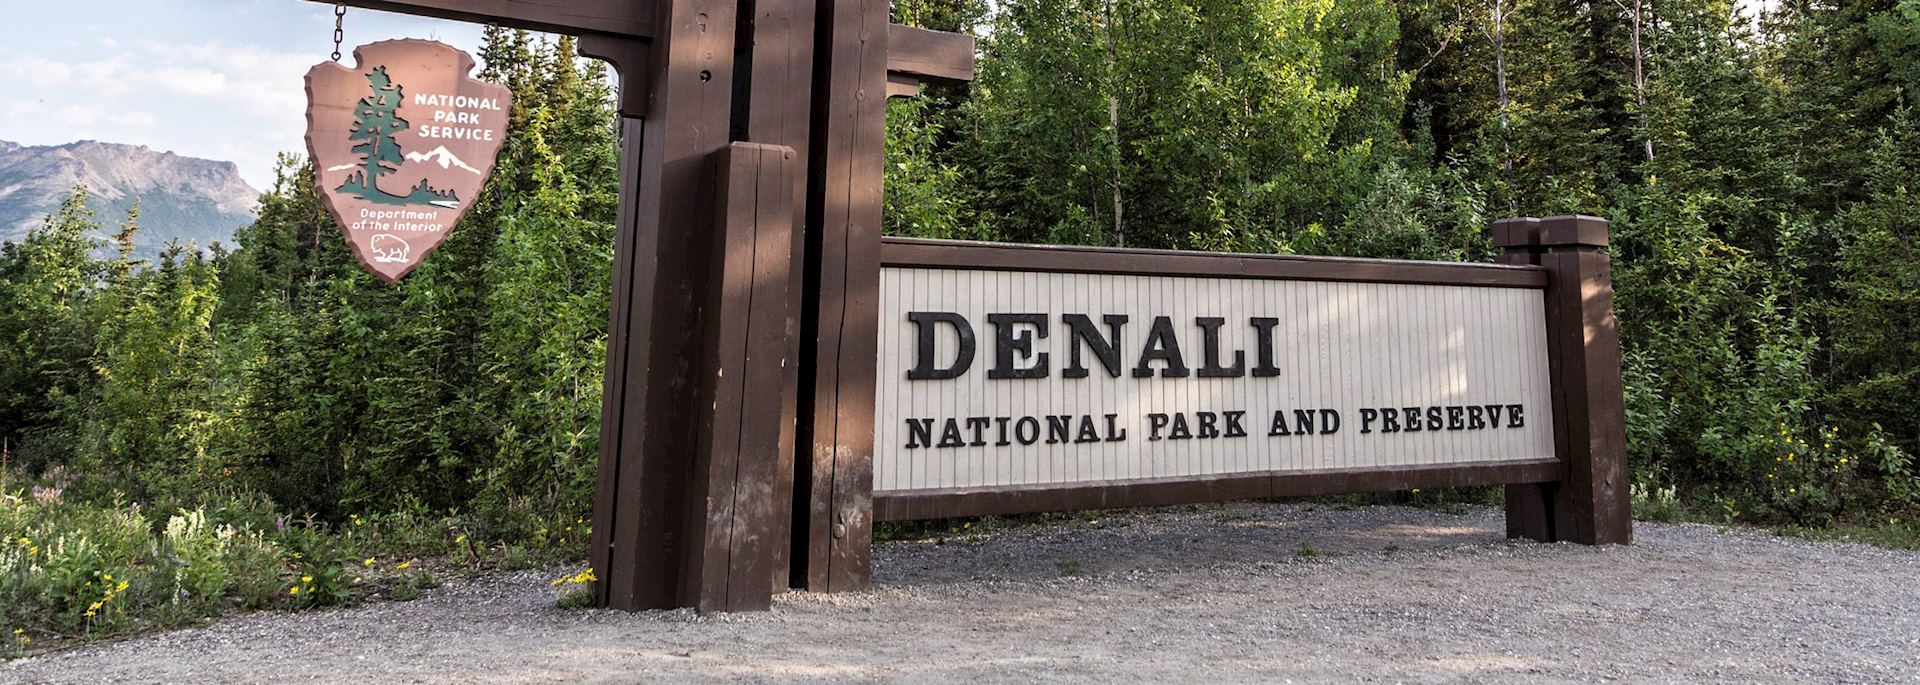 Denali National Park entrance